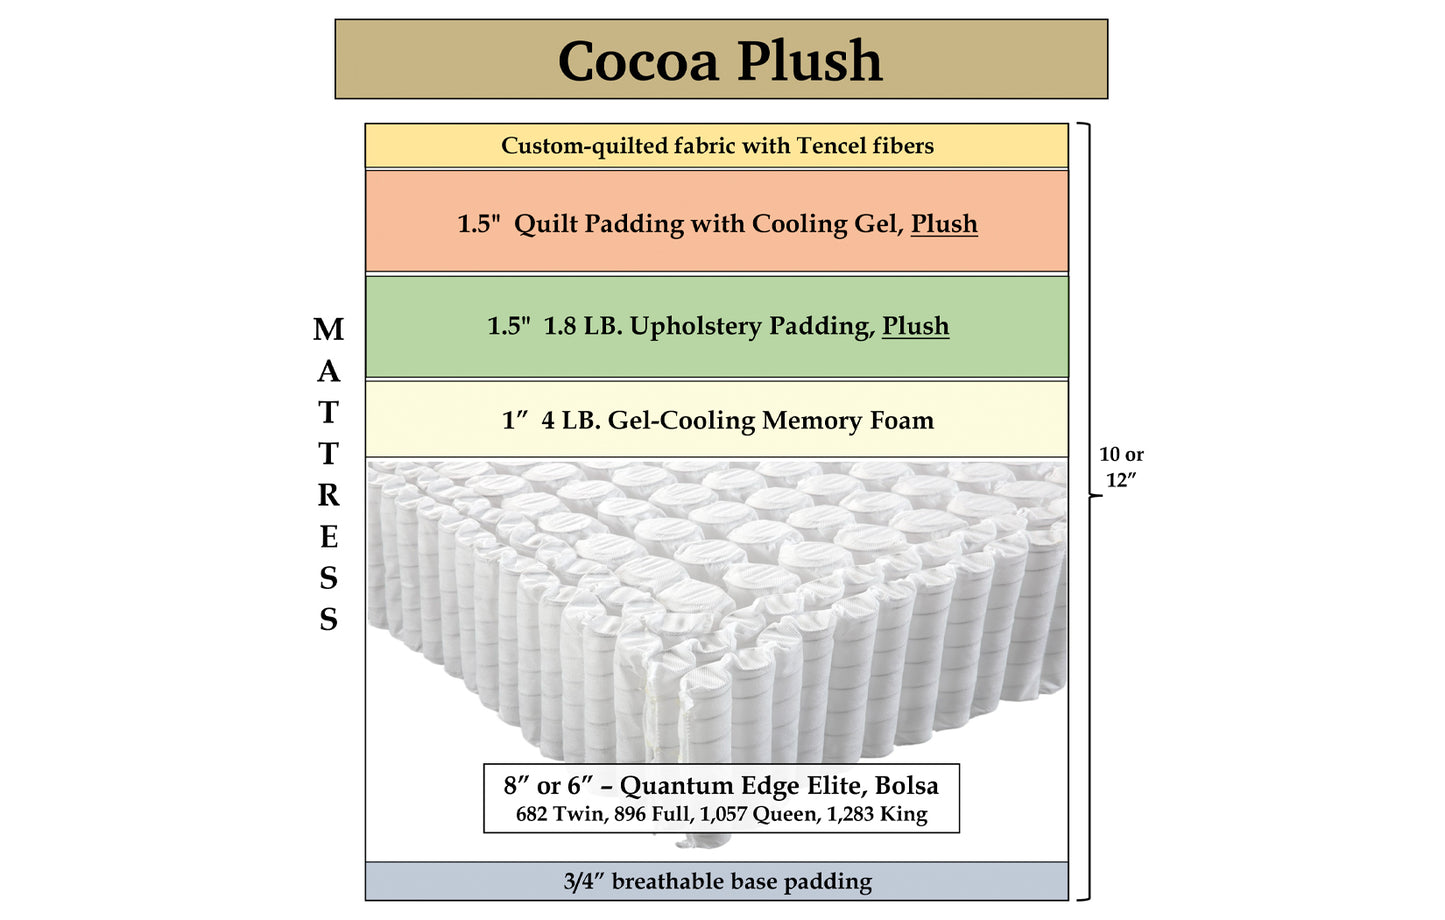 Cocoa Plush, custom mattress